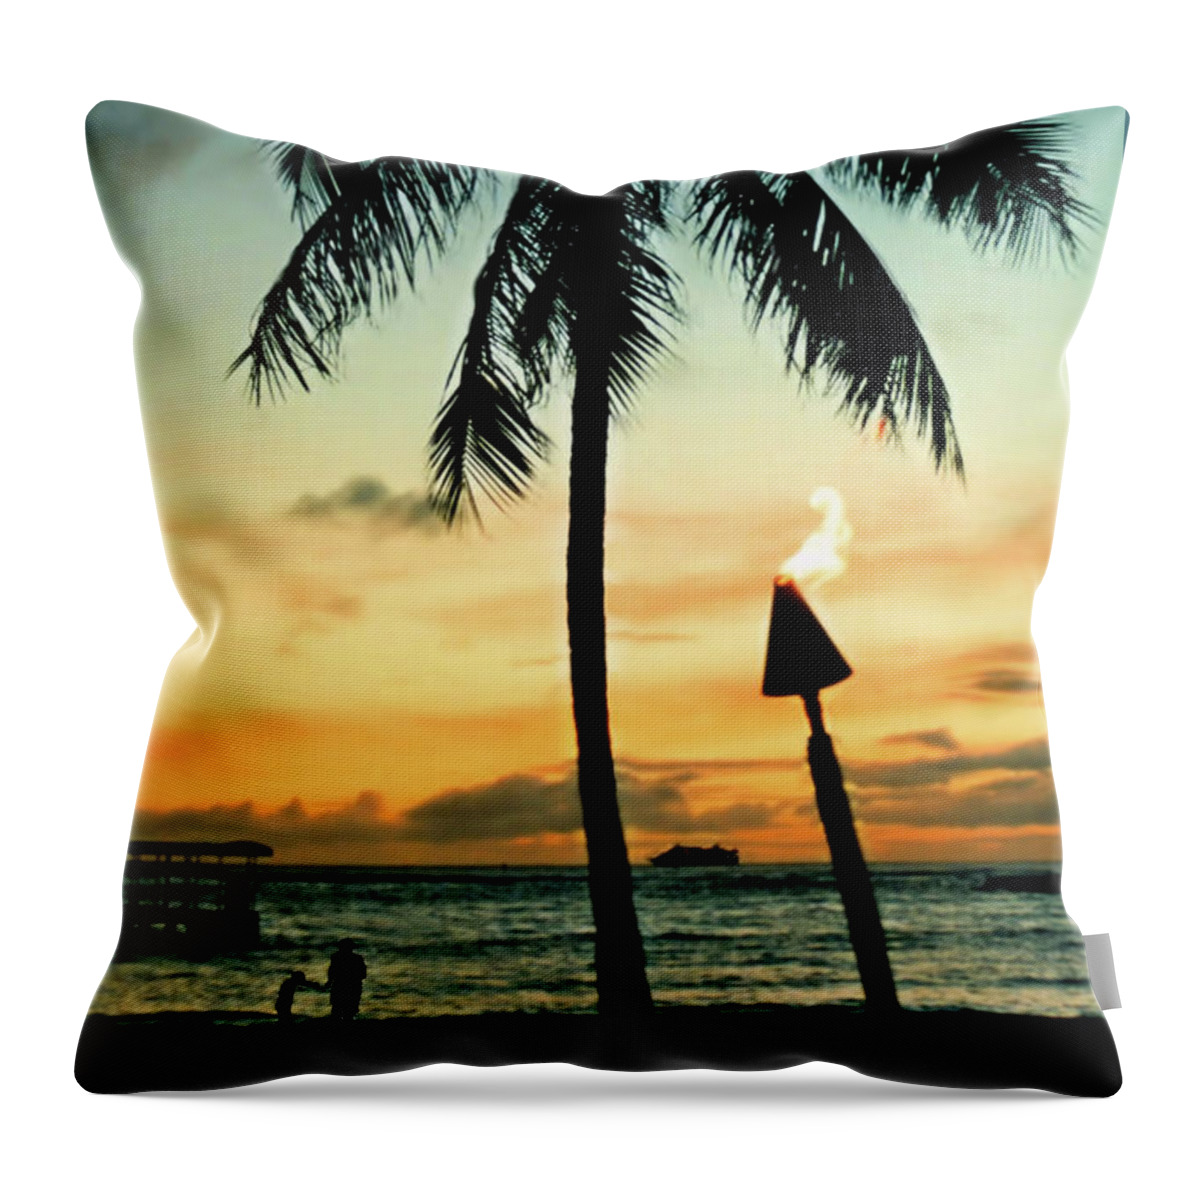 Hawaii Throw Pillow featuring the photograph Waikiki Sunset by DJ Florek